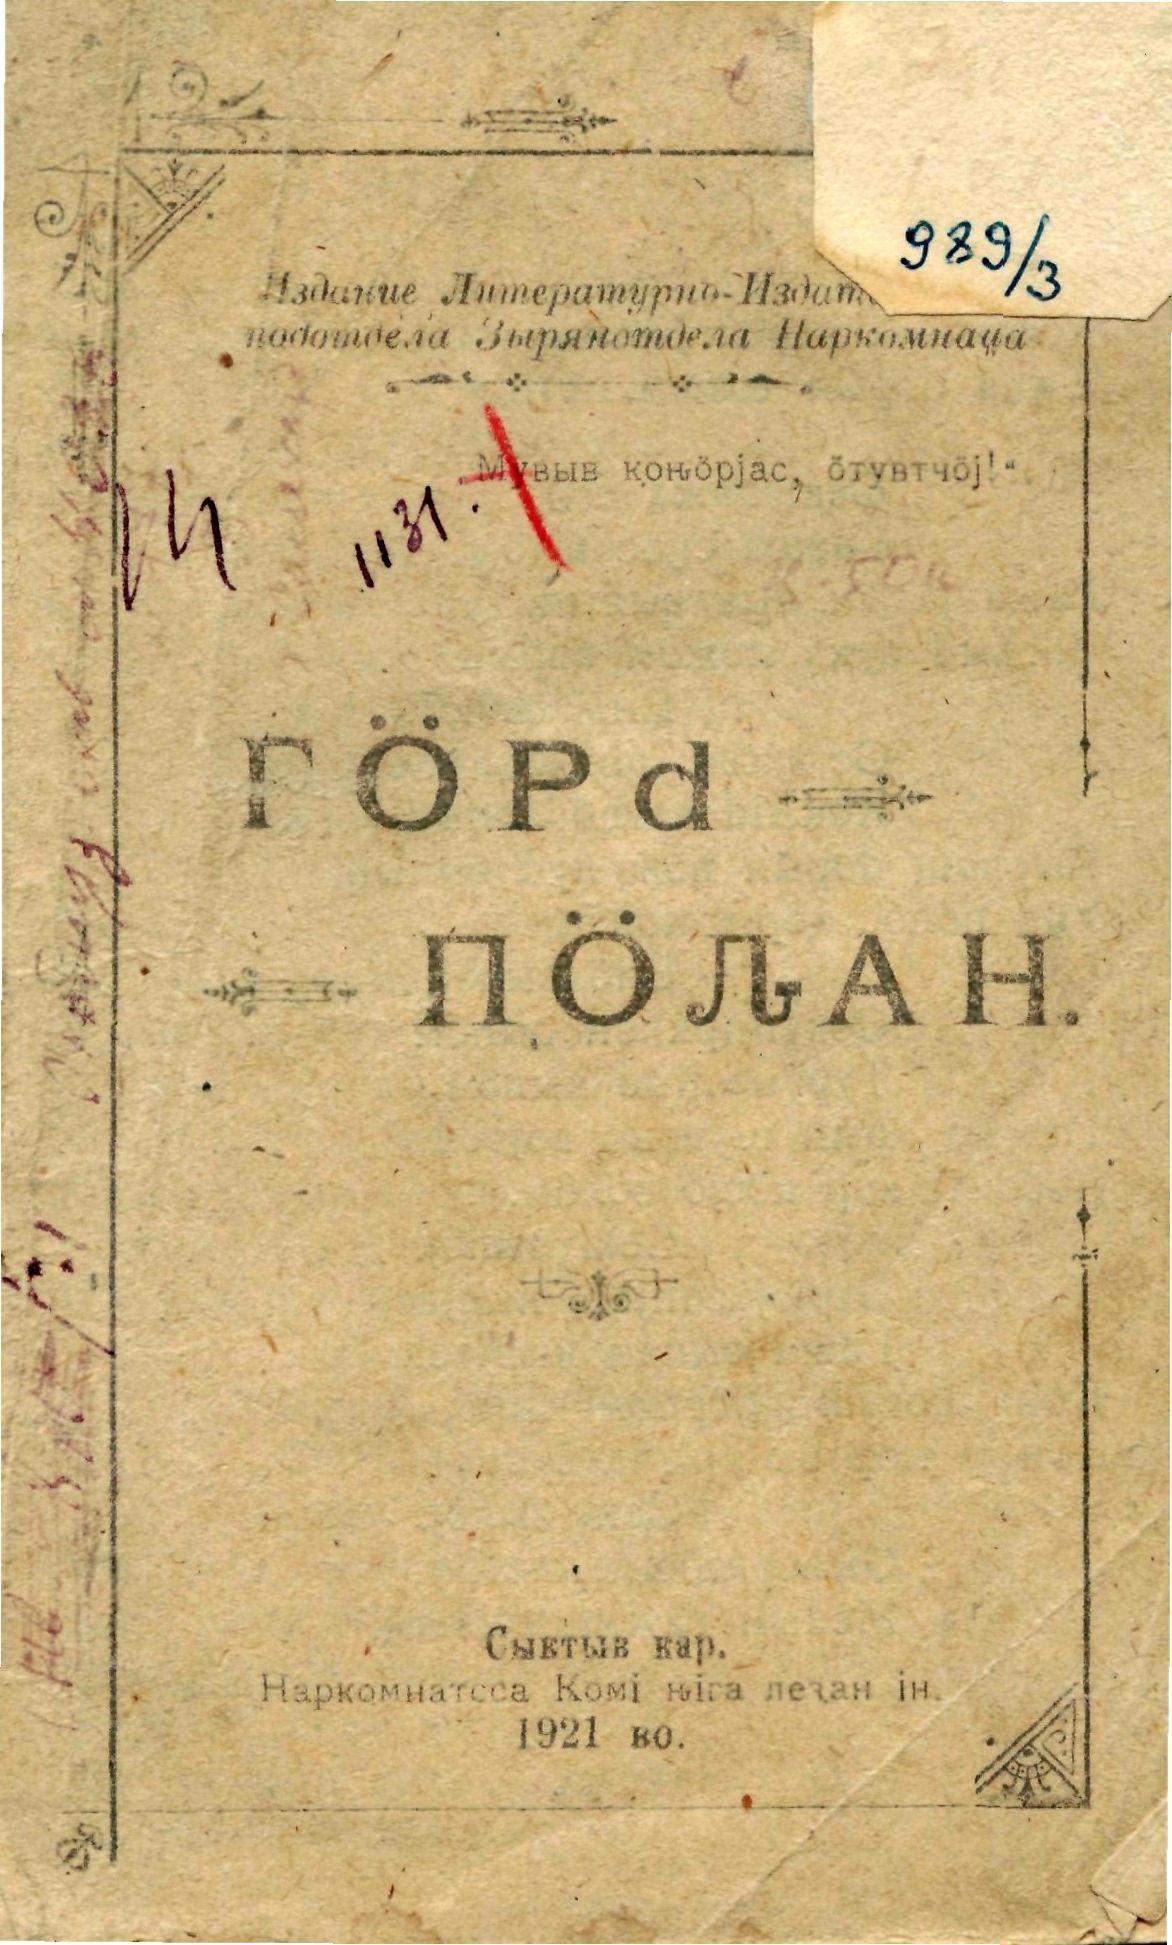 Kpv gordpolan 1921 cover.jpg